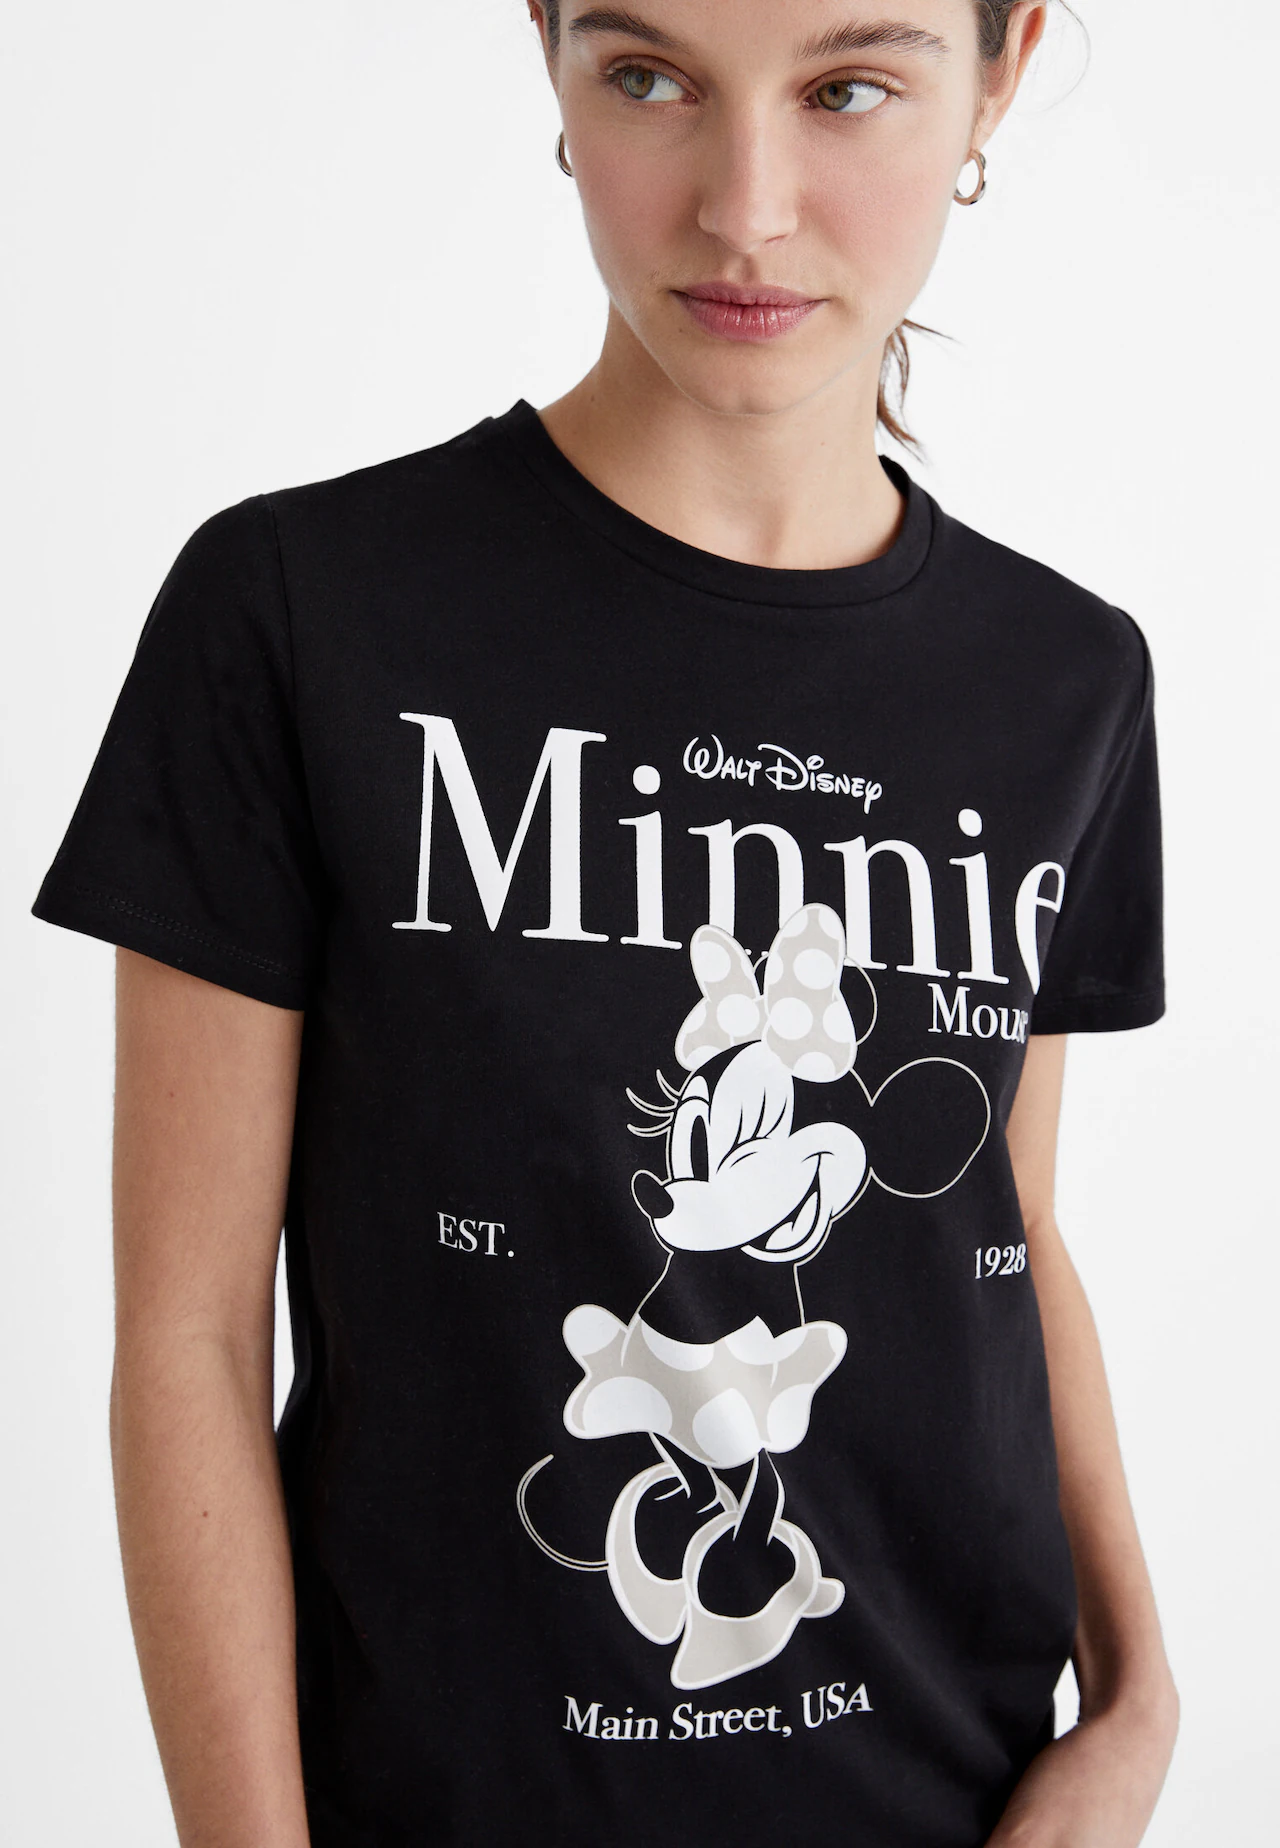 Minnie Mouse T-shirt - Women's fashion